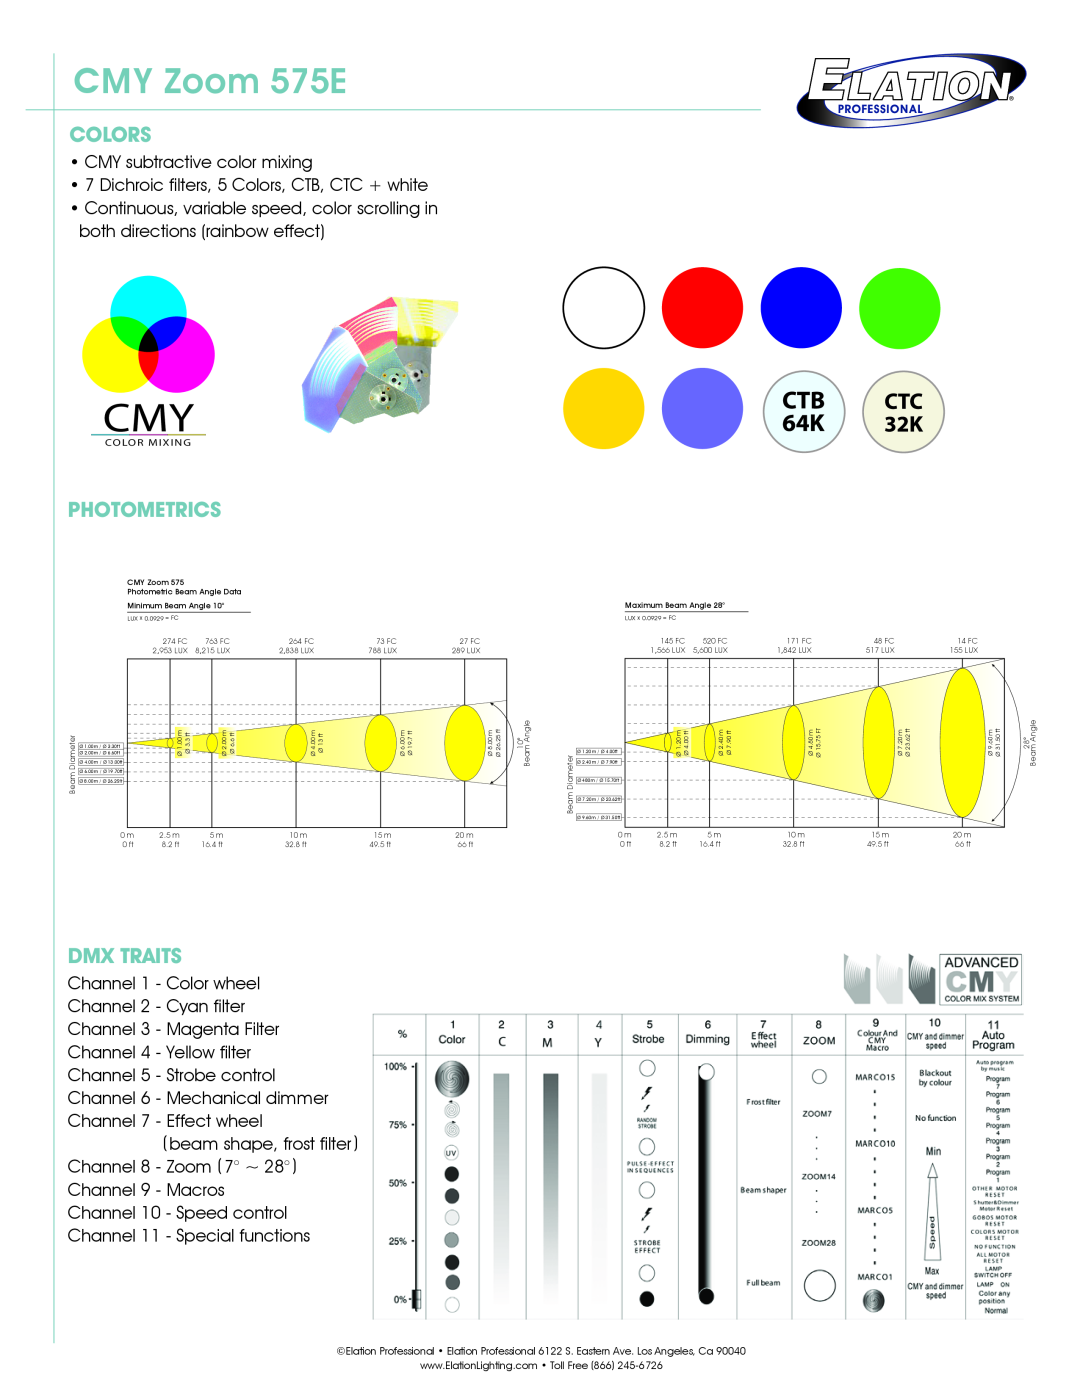 Elation Professional technical specifications Colors, Photometrics, Dmx Traits, CMY Zoom 575E 